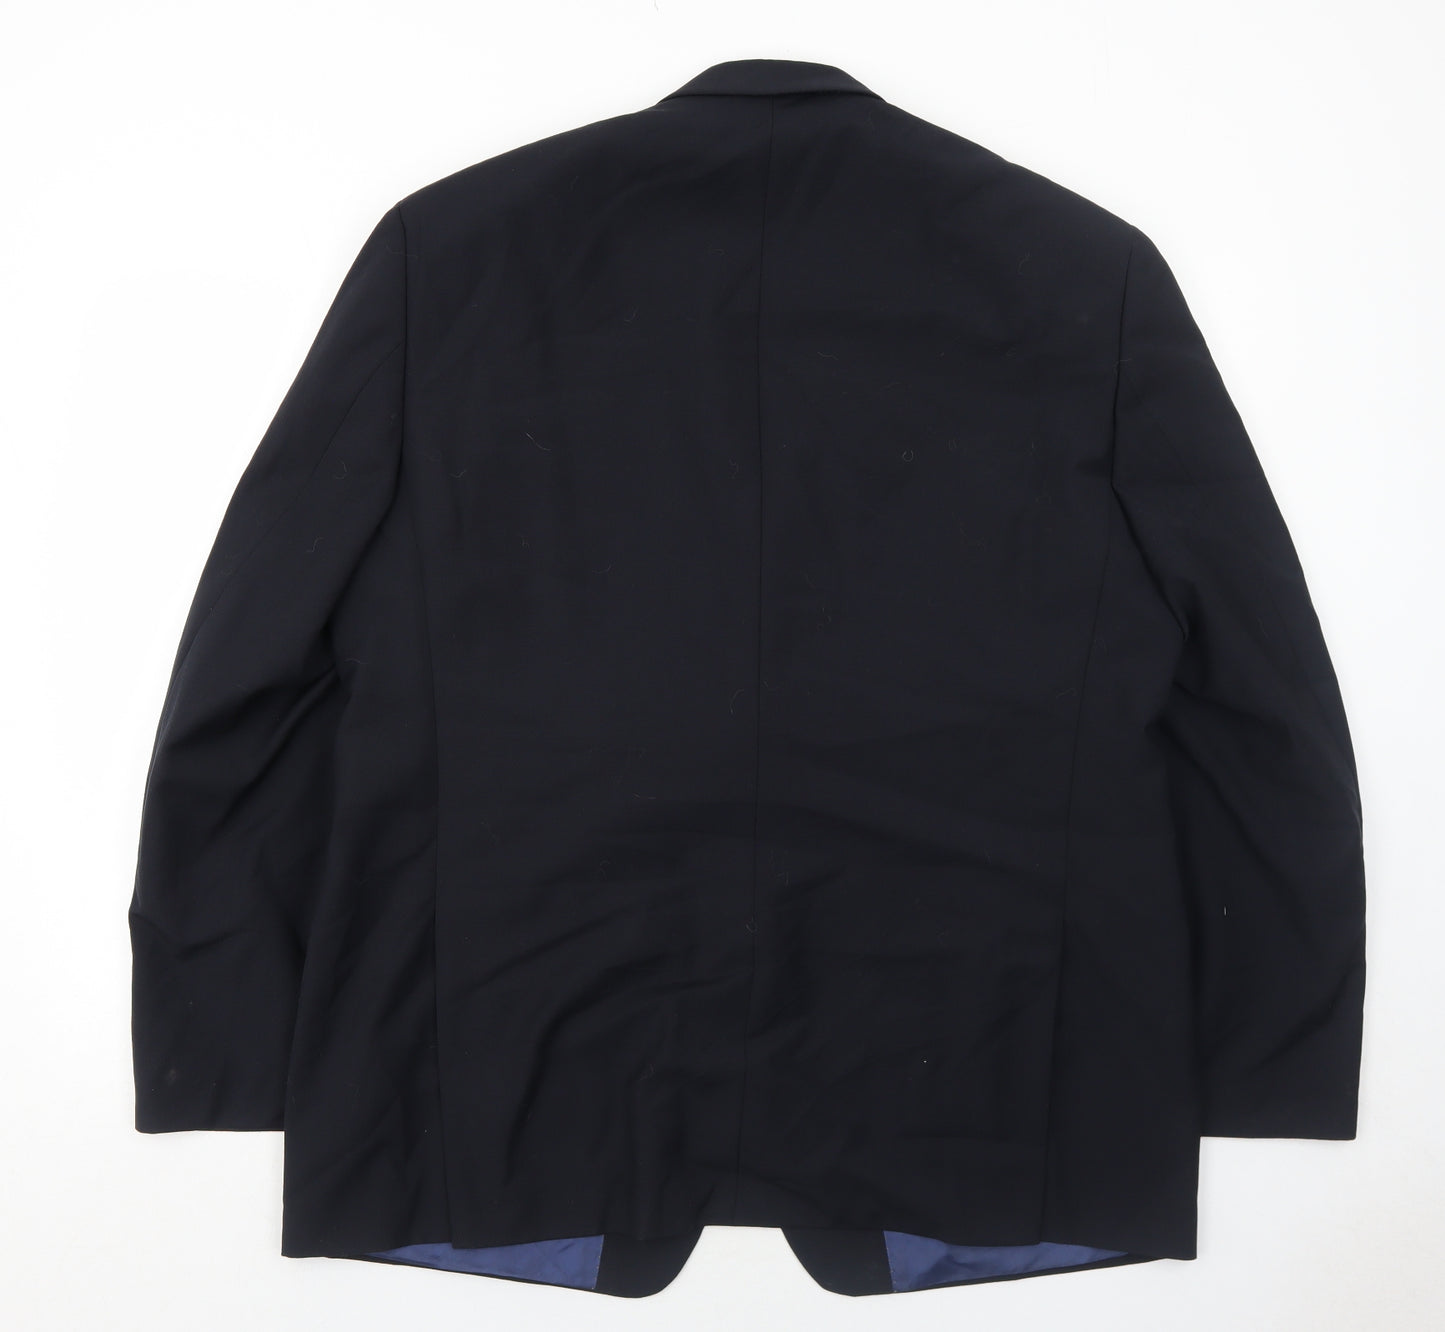 Atelier Torino Mens Black Polyester Jacket Suit Jacket Size 46 Regular